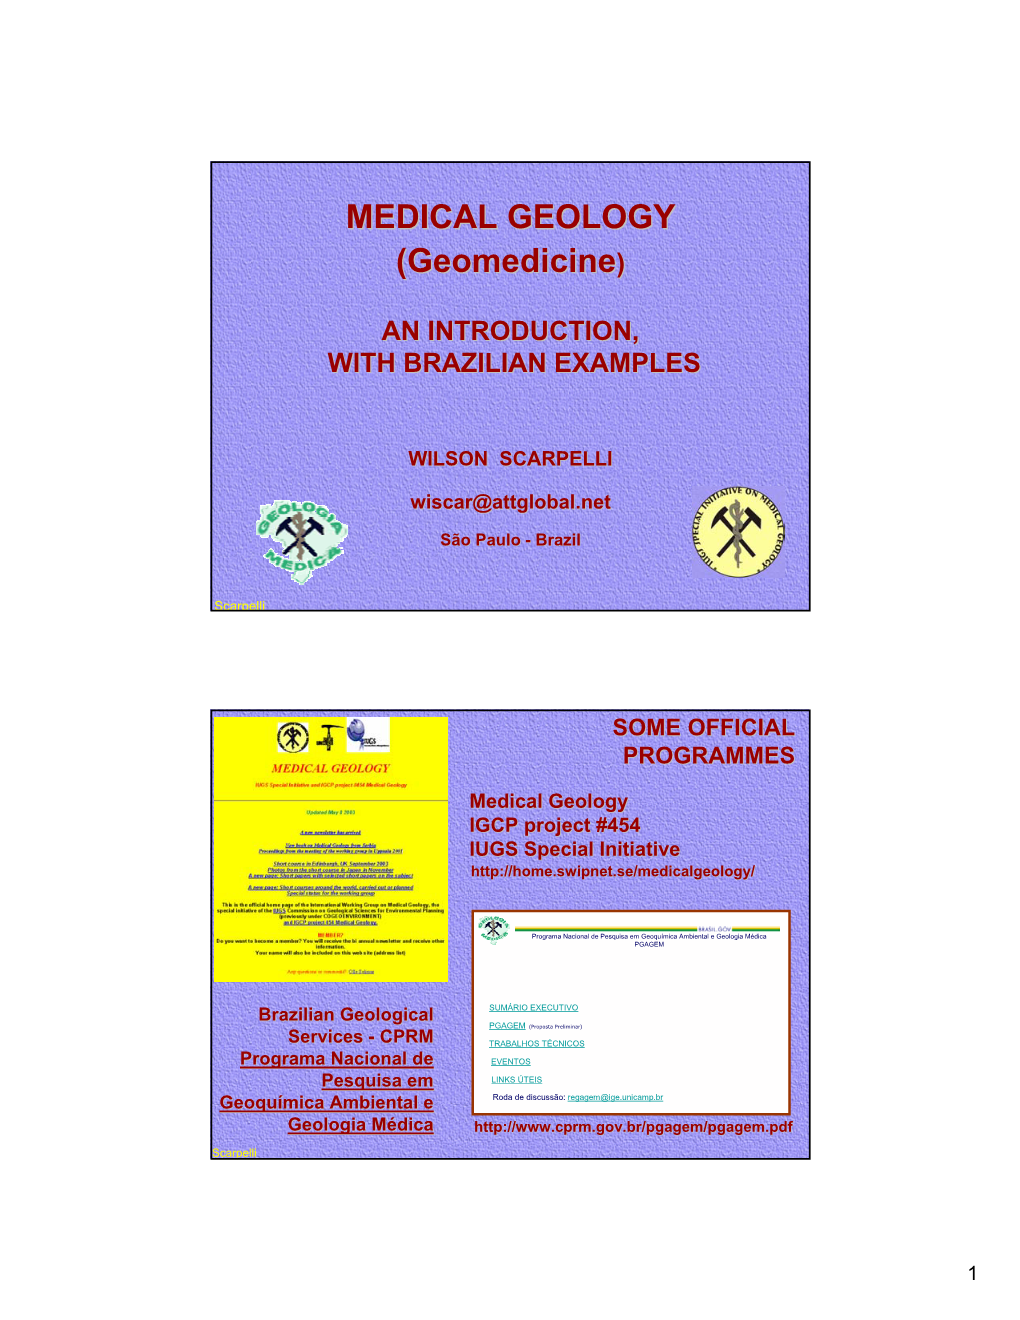 MEDICAL GEOLOGY (Geomedicine)